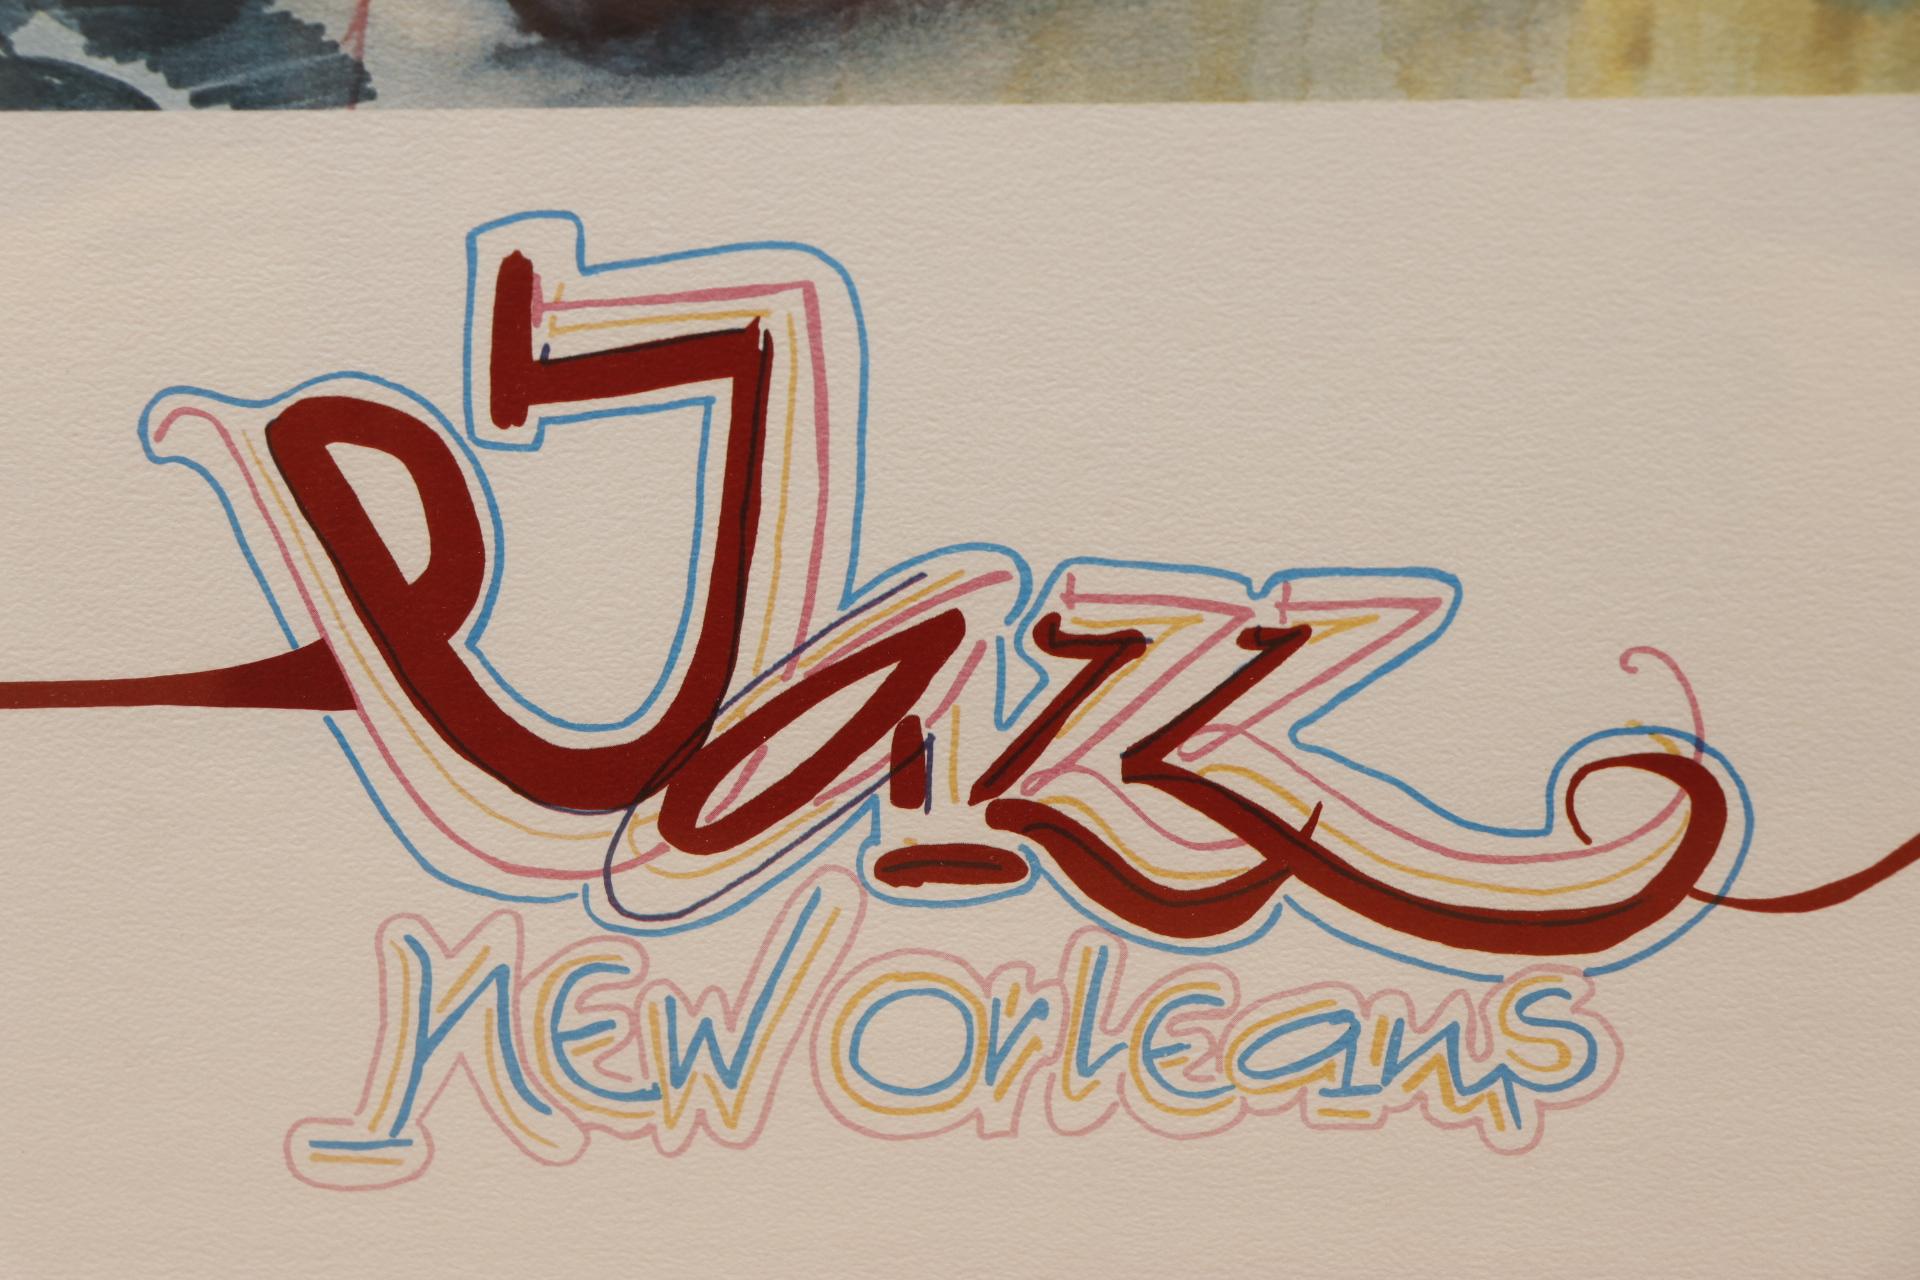 American 1978 Leo Meiersdorff “Jazz New Orleans” Framed Poster